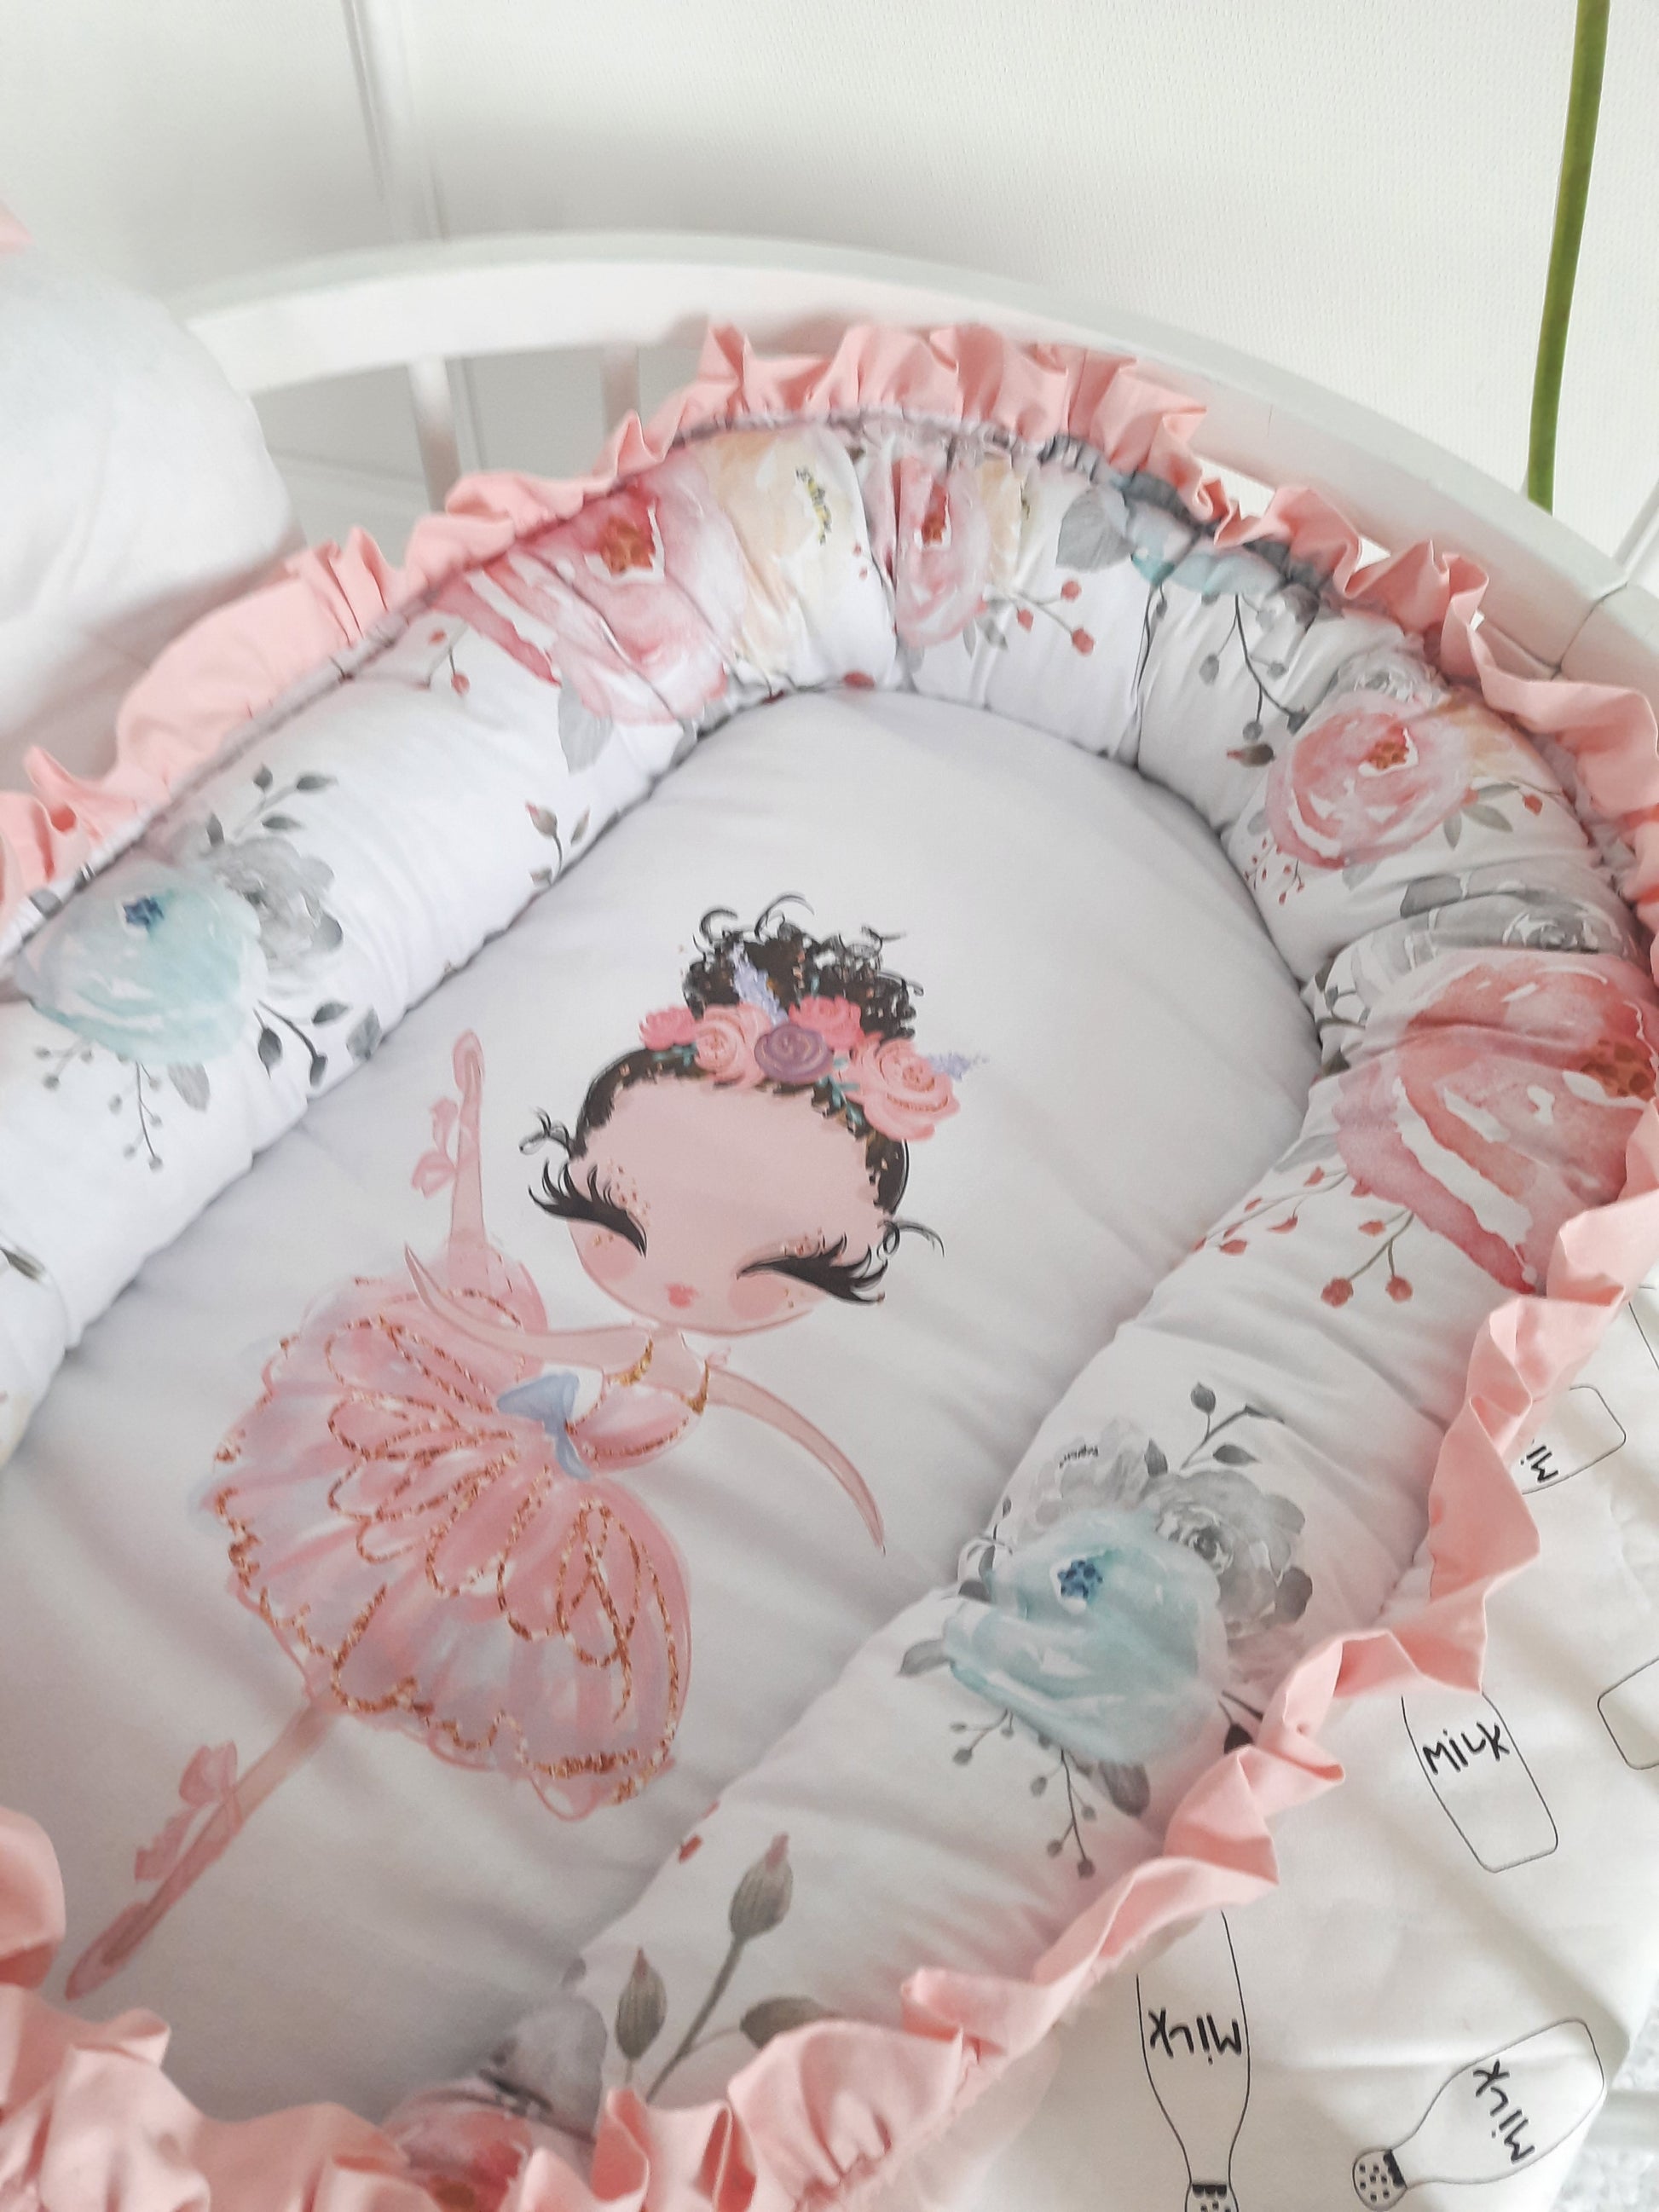 Printed Baby Nest | Cute Baby Nest | Allbright Kids